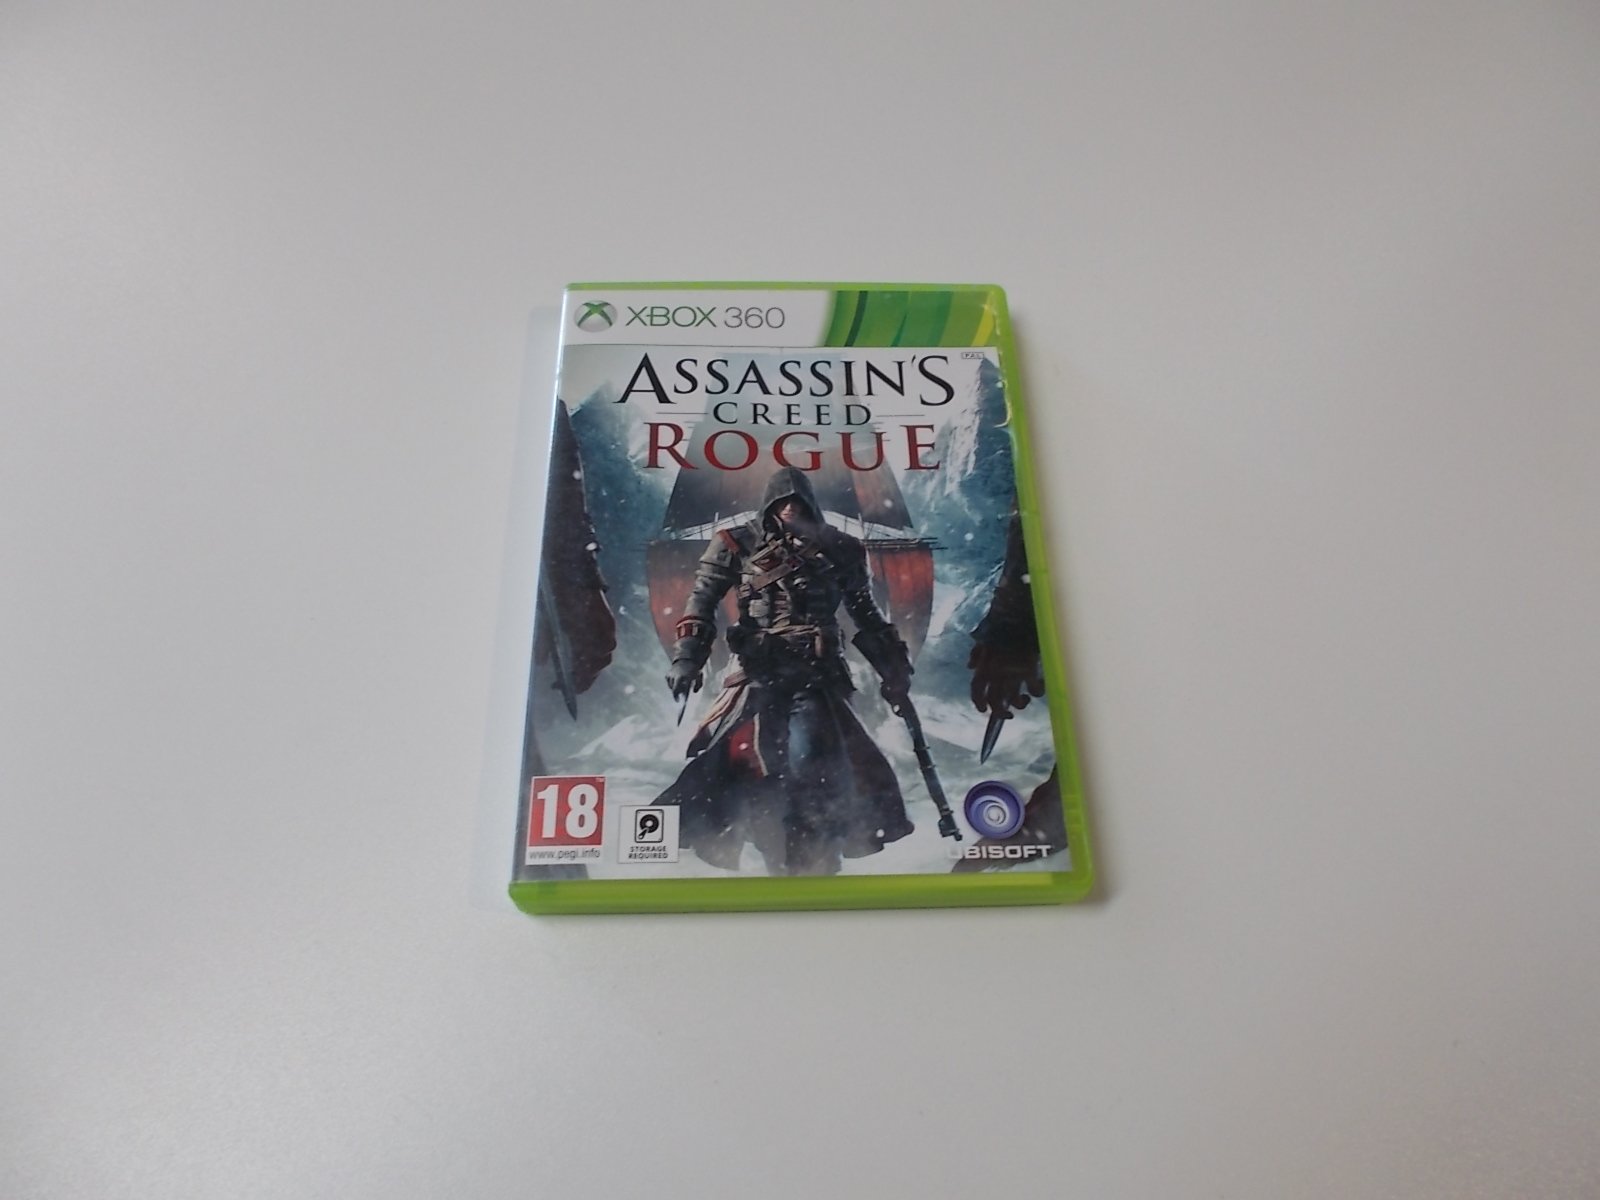 Assassin's Creed Rogue - GRA Xbox 360 - Opole 0435